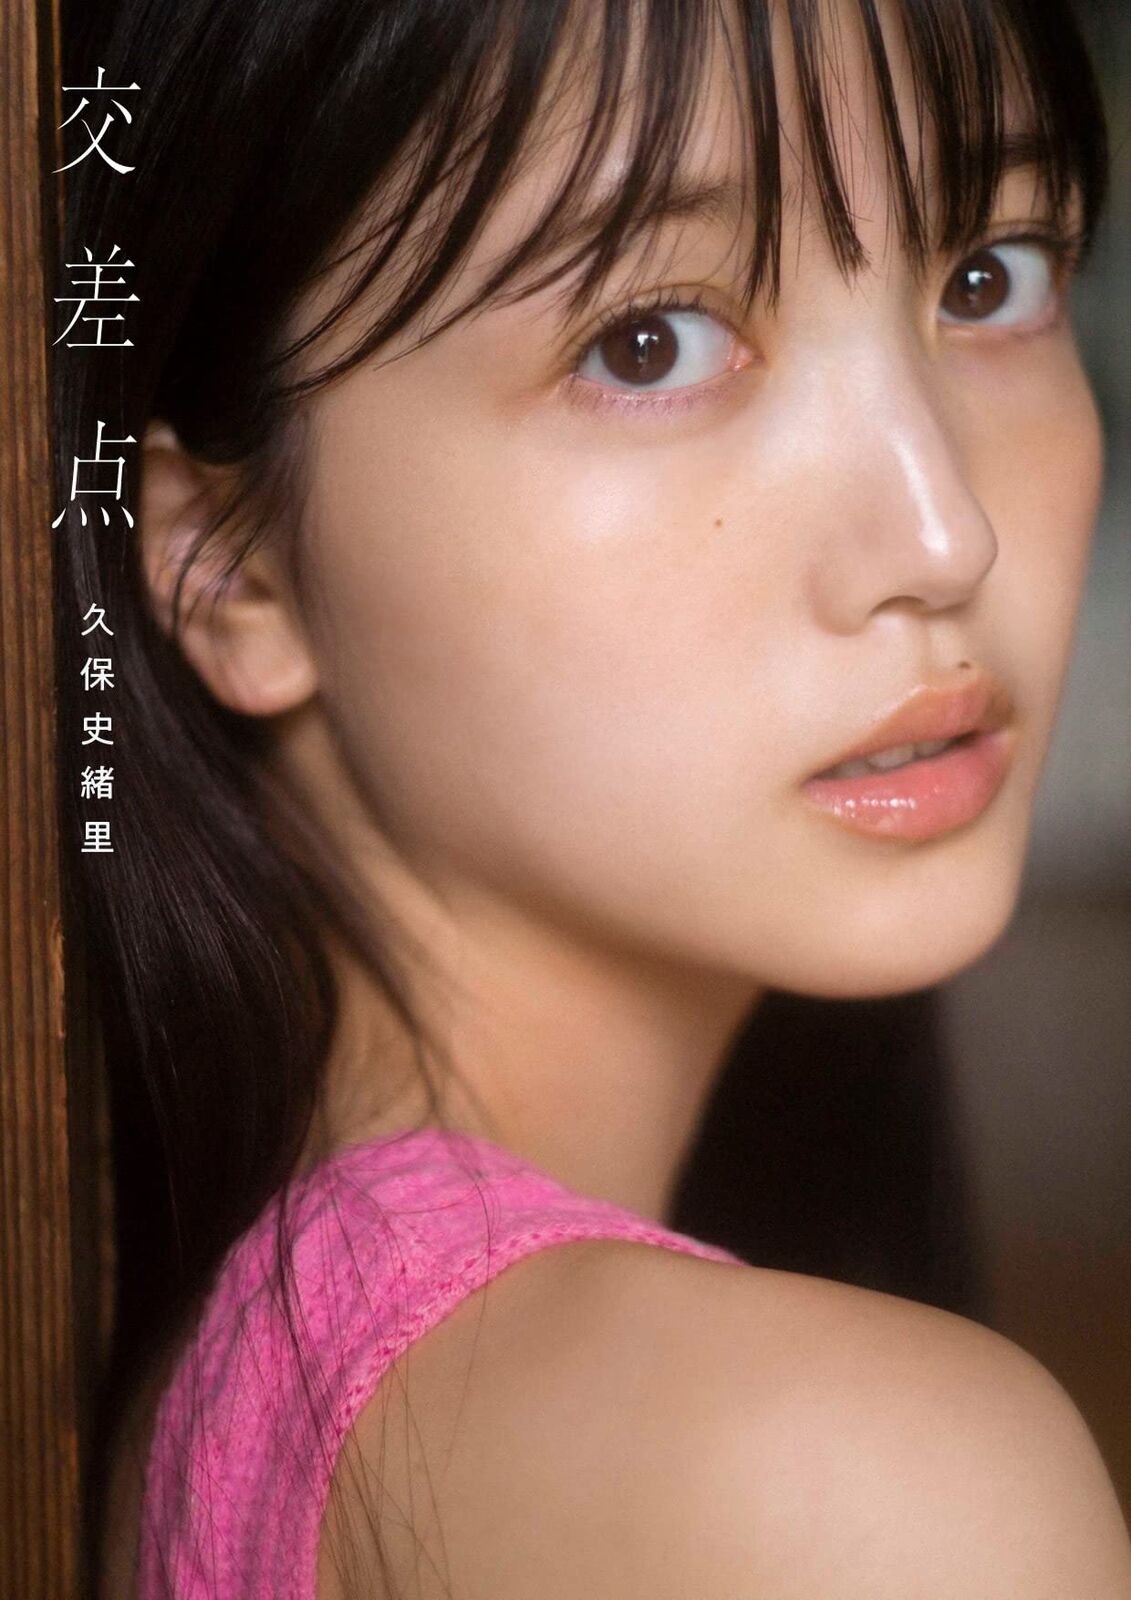 Nogizaka46 Shiori Kubo 1st Photobook Intersection Photograph Book Idol Japan